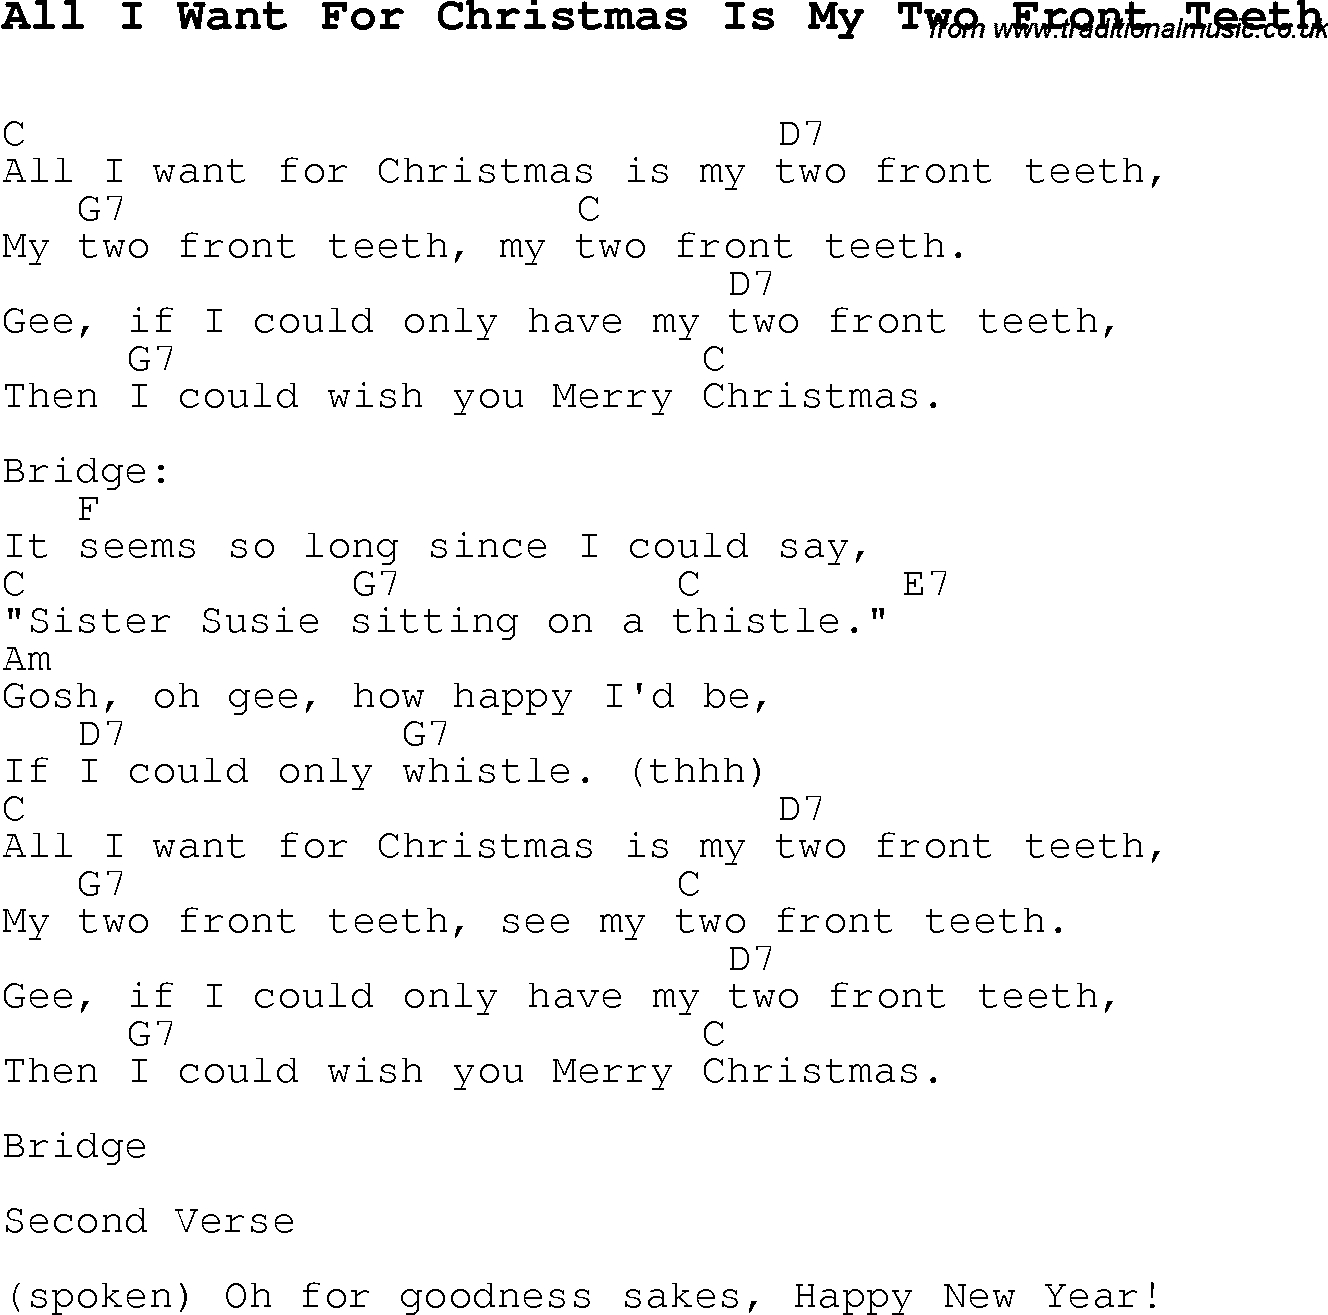 All I Want Chords Christmas Carolsong Lyrics With Chords For All I Want For Christmas